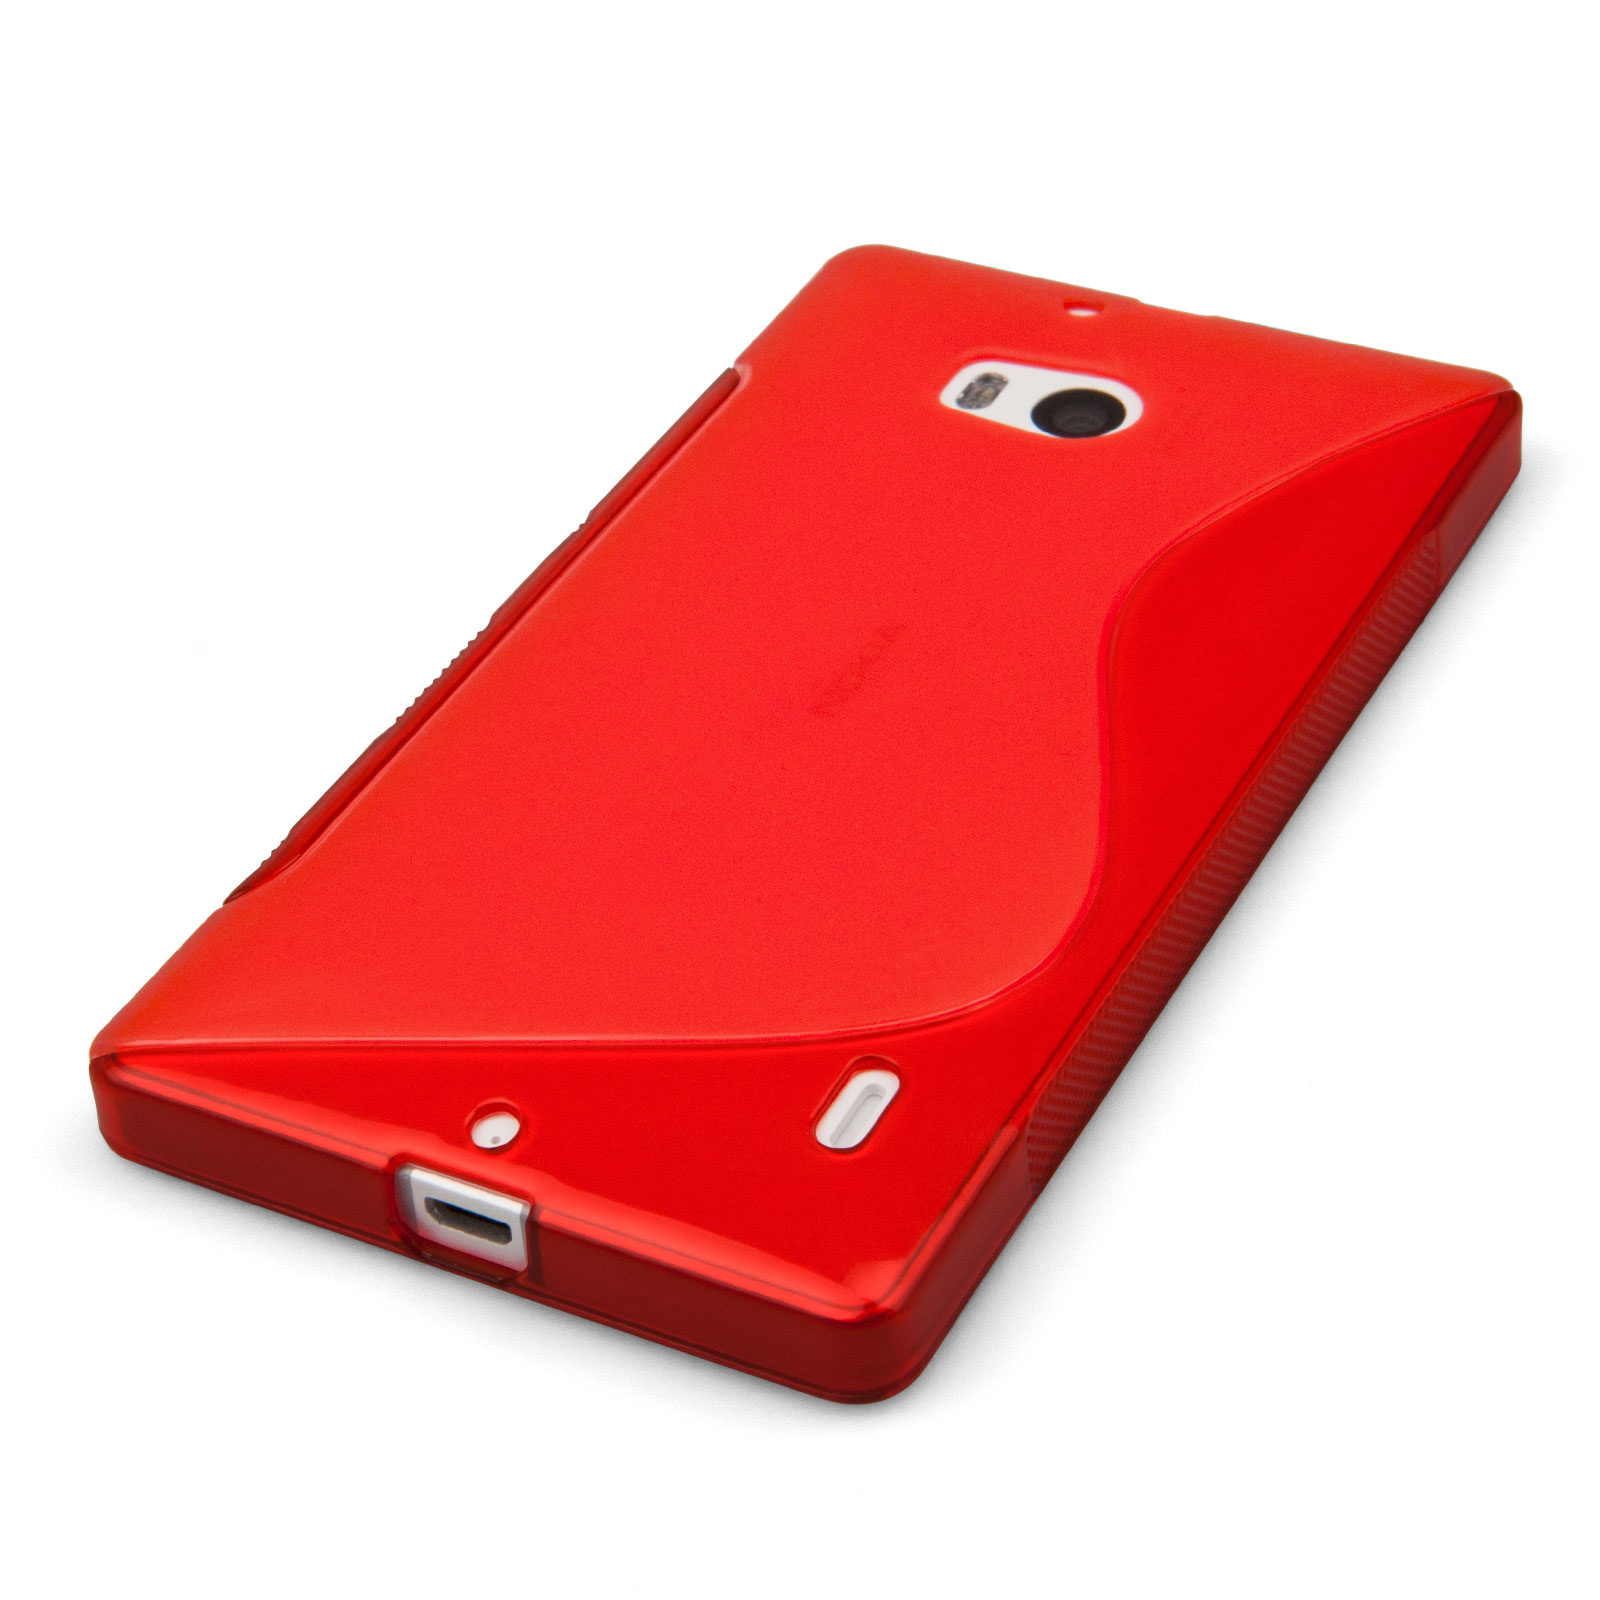 Caseflex Nokia Lumia 930 Silicone Gel S-Line Case - Red